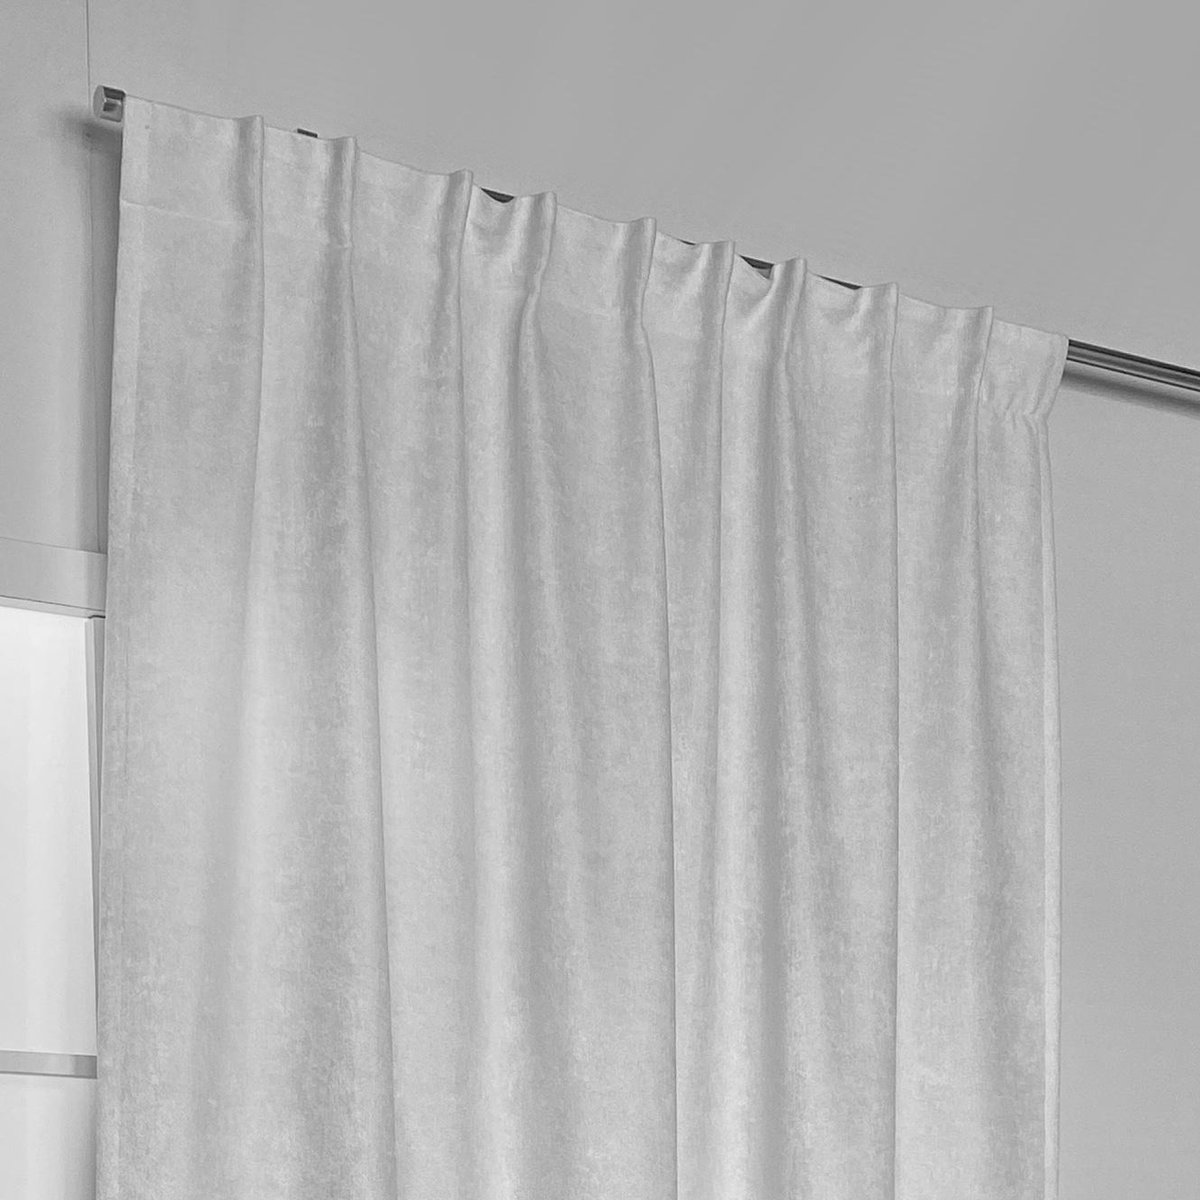 Home of Curtains - Victoria - Gordijn - Plooiband - Kant en Klaar - 150x260 cm - Wit